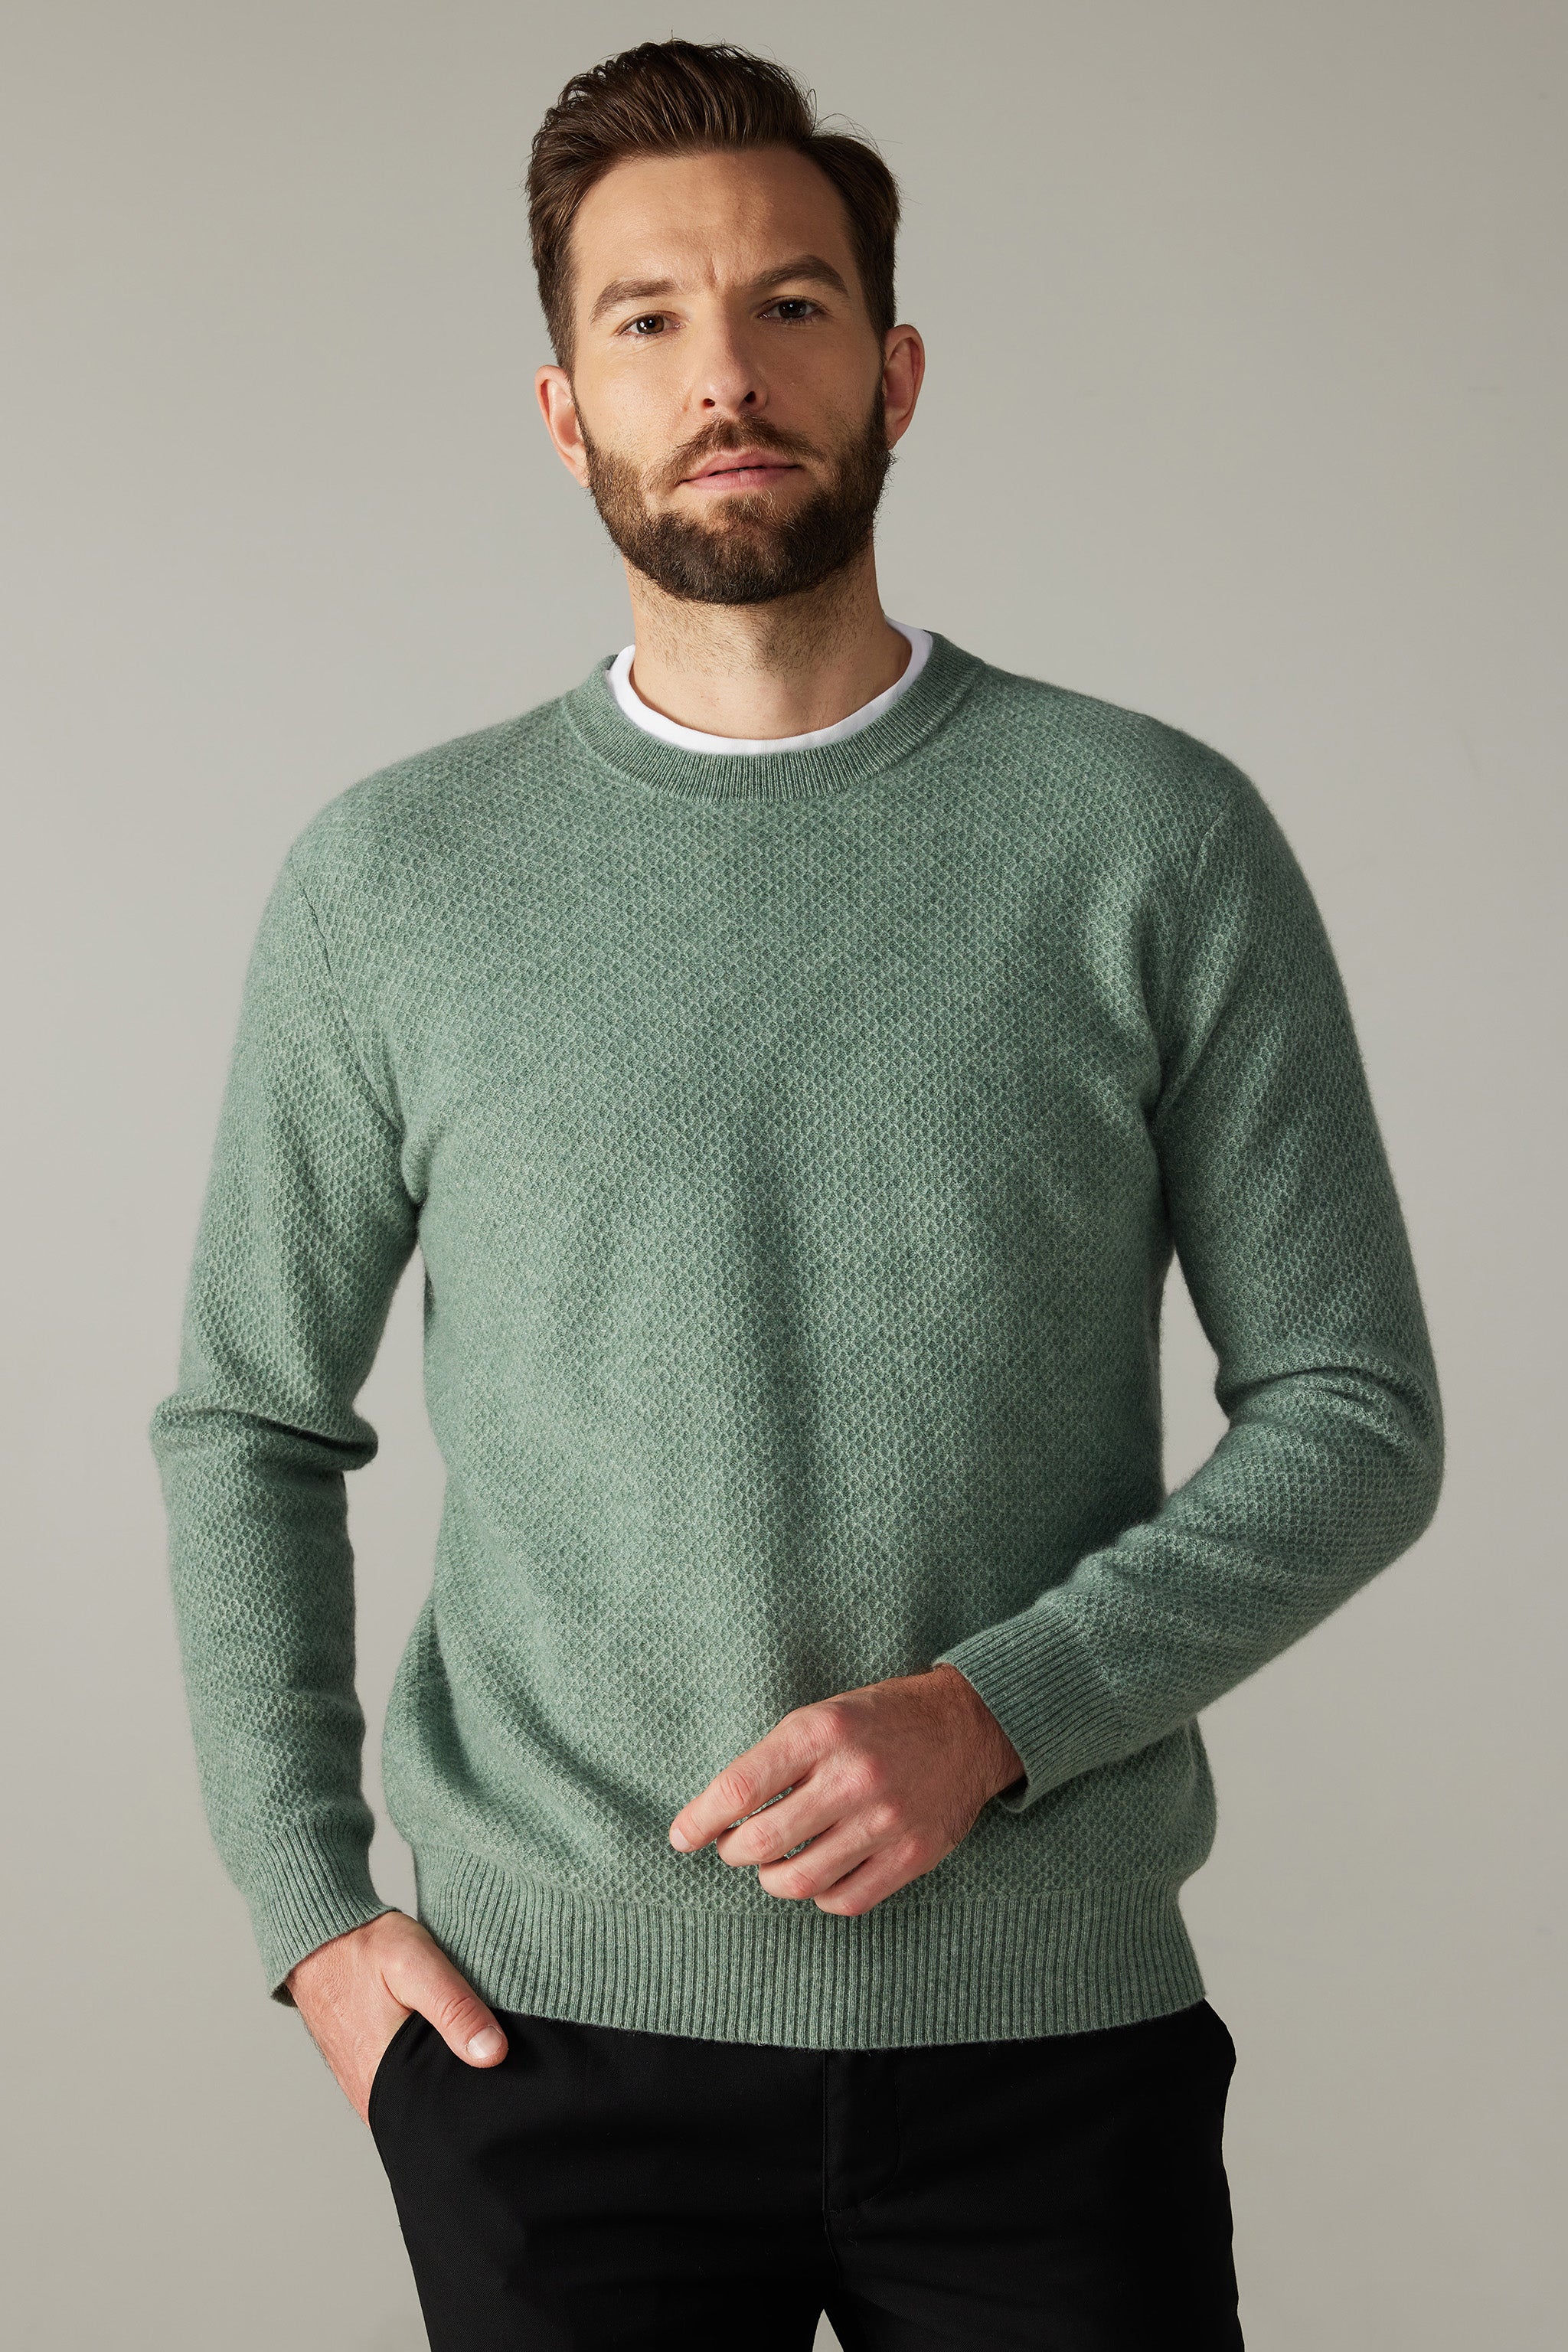 a man with a beard wearing a green sweater